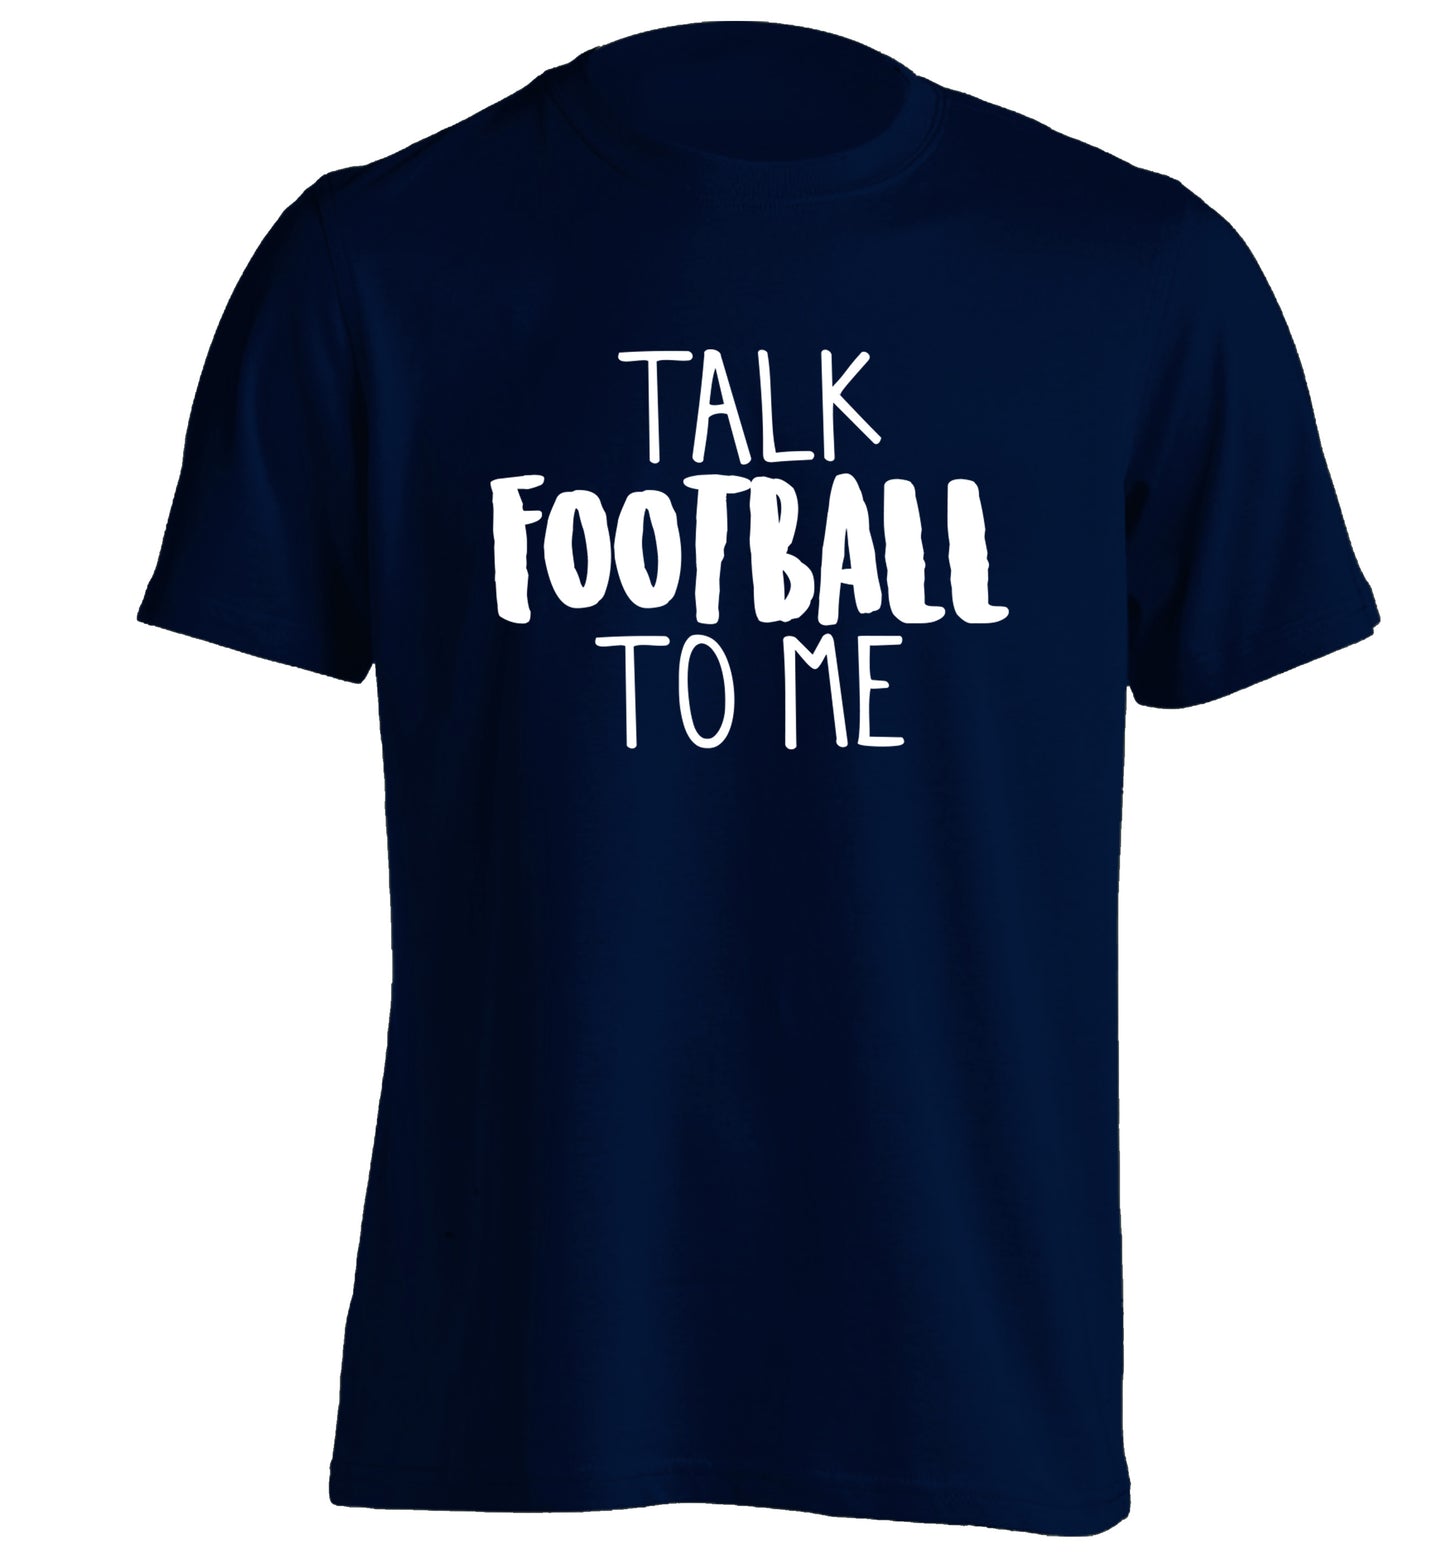 Talk football to me adults unisexnavy Tshirt 2XL